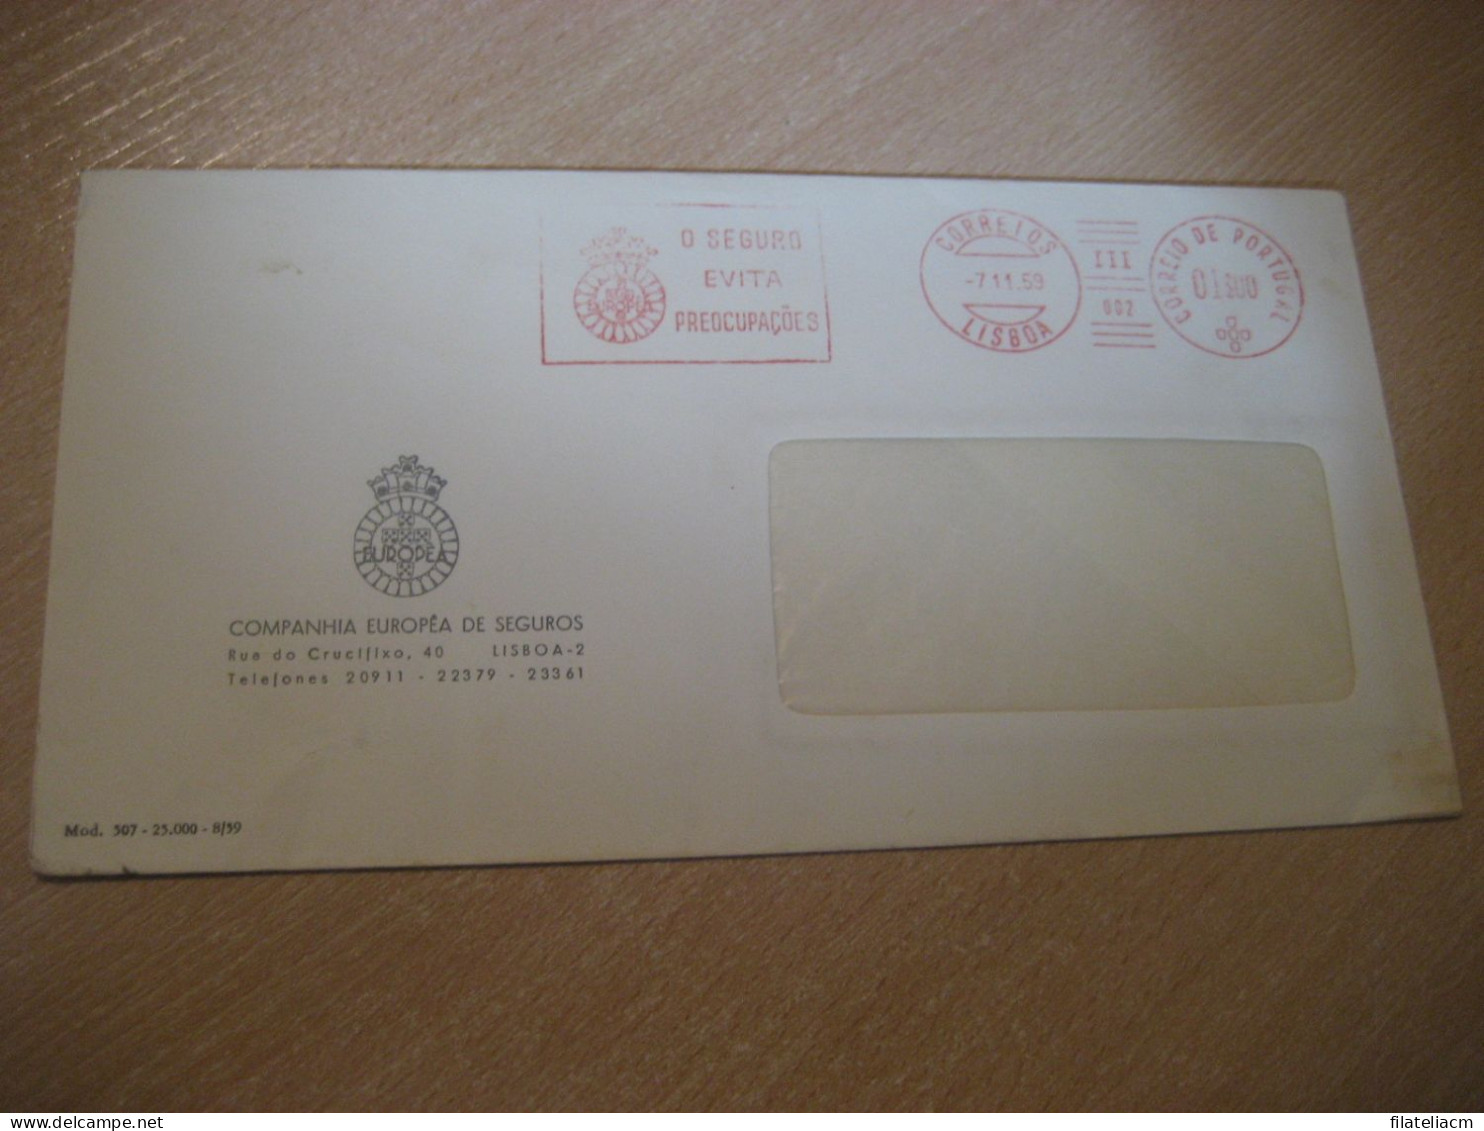 LISBOA 1959 Companhia Europea De Seguros Meter Mail Cancel Cover PORTUGAL - Covers & Documents